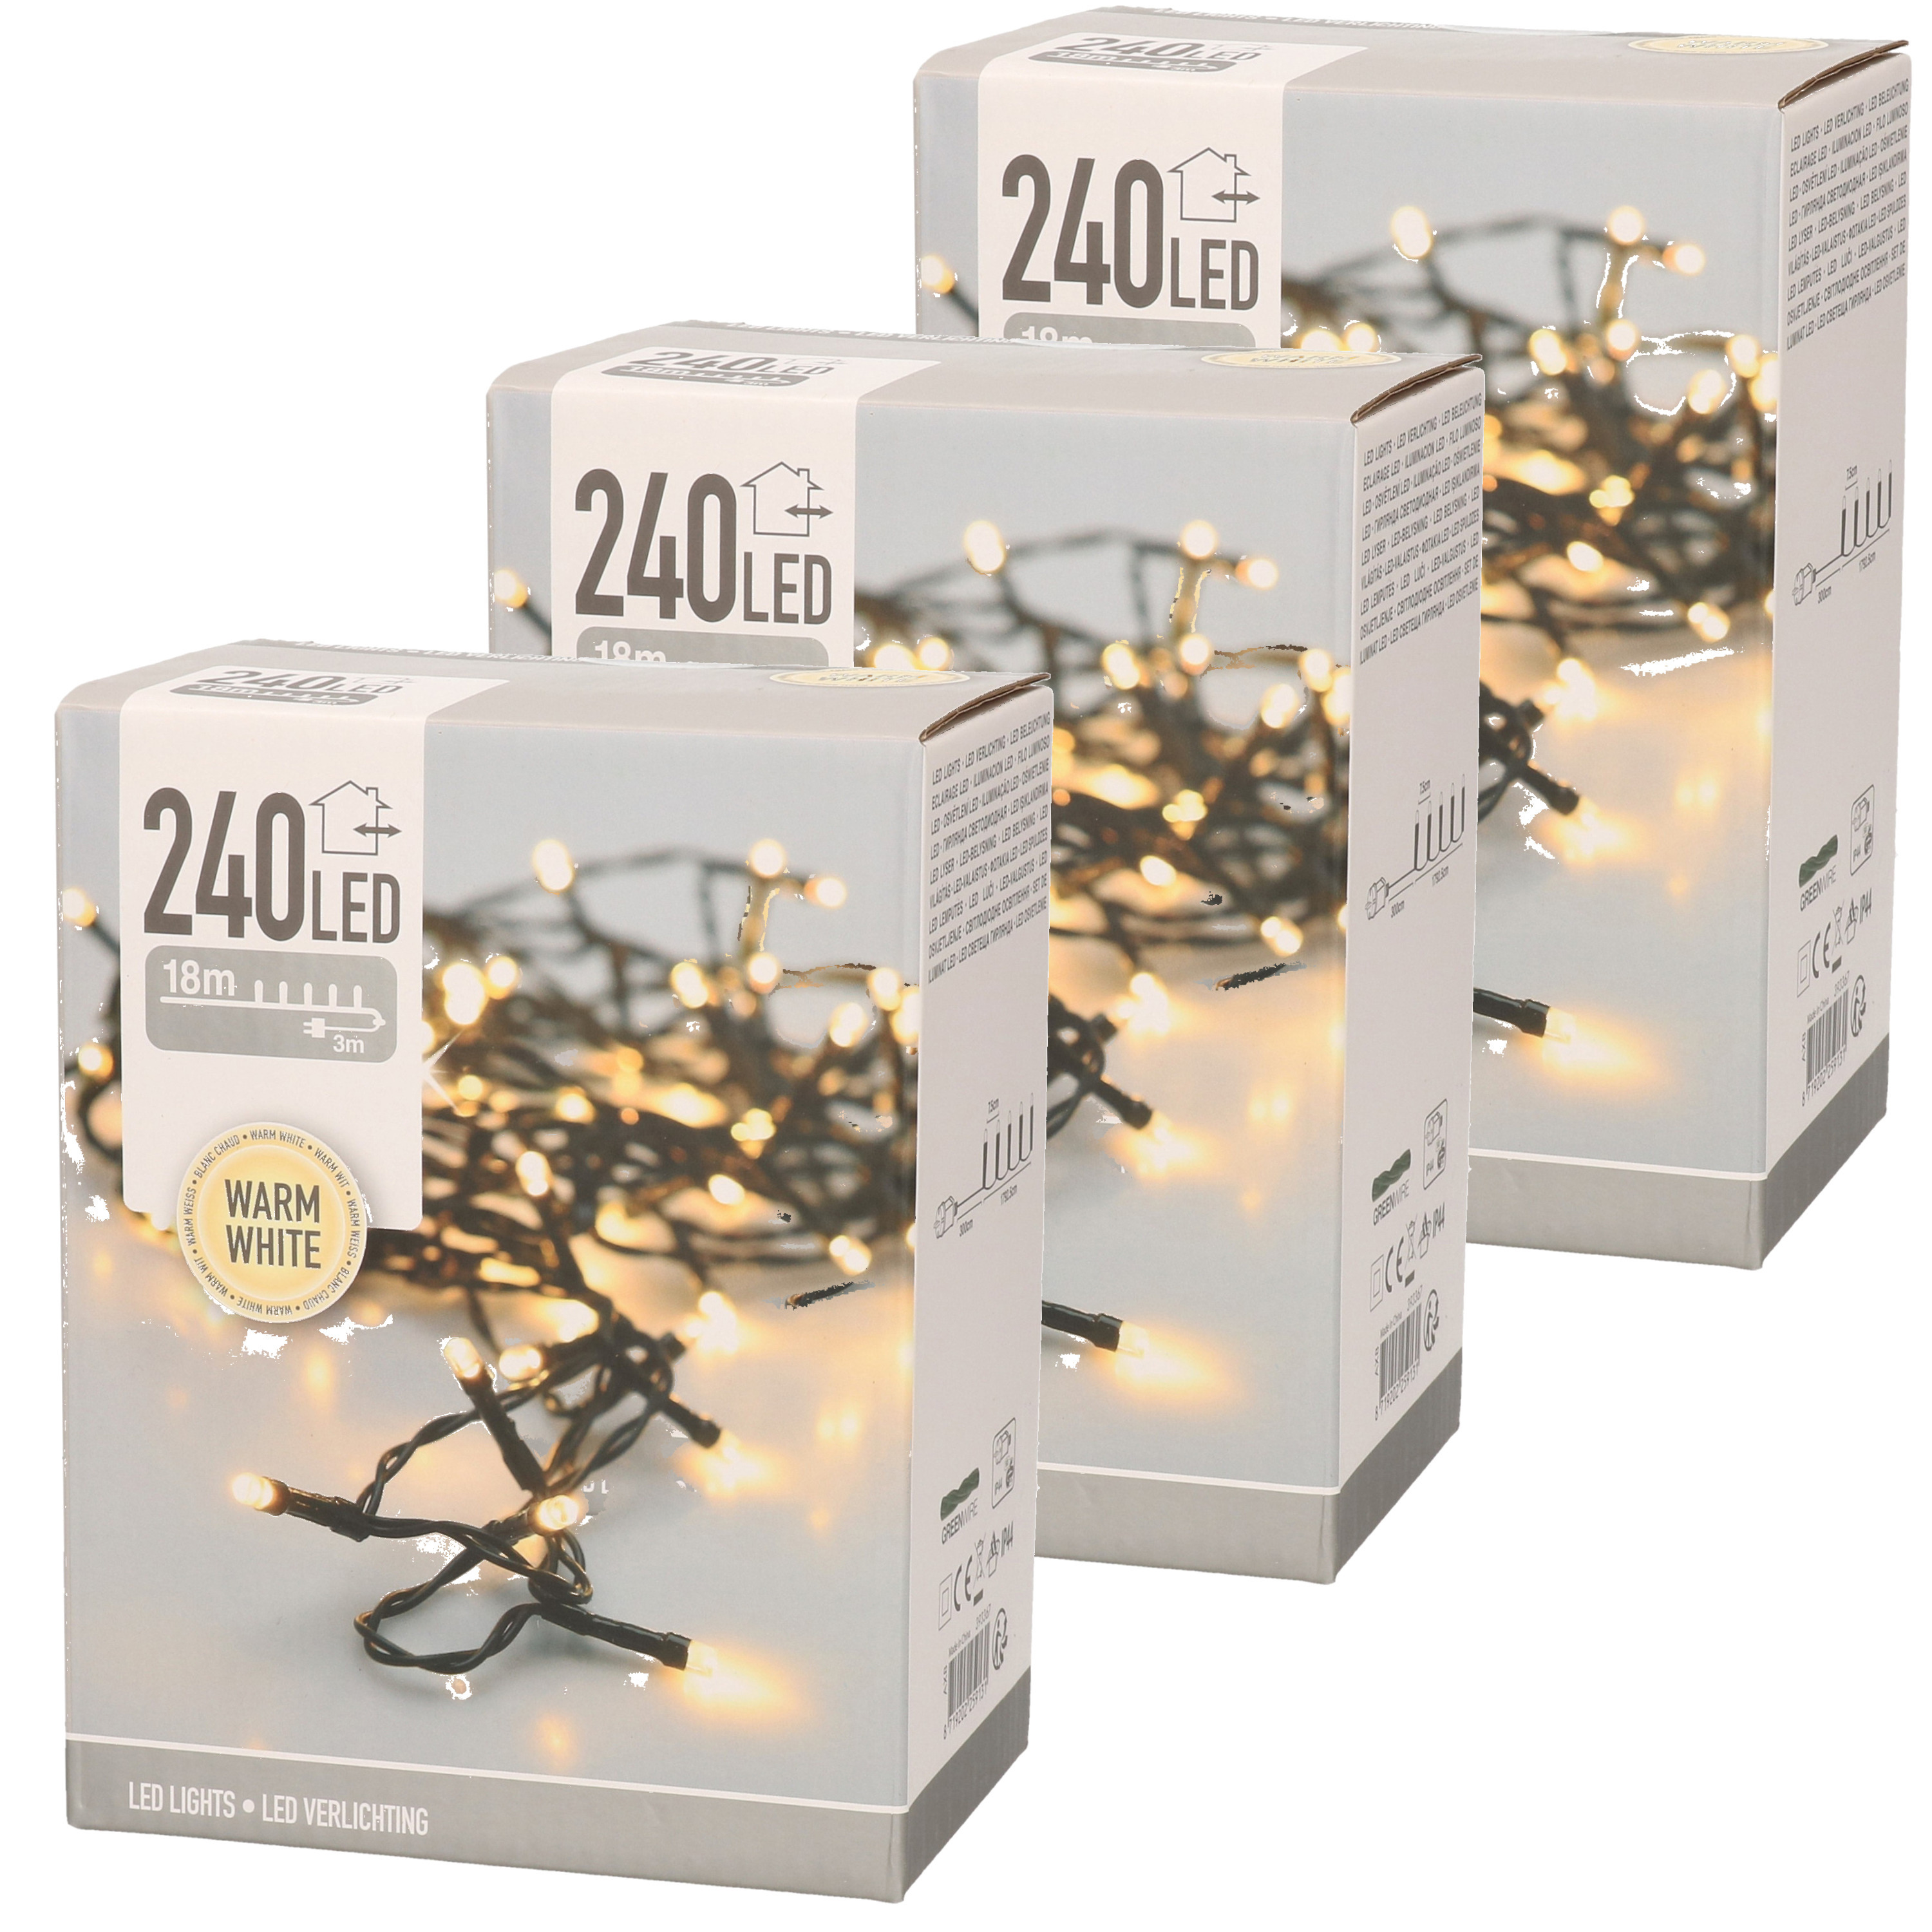 3x Kerst verlichting 240 LED lampjes wit